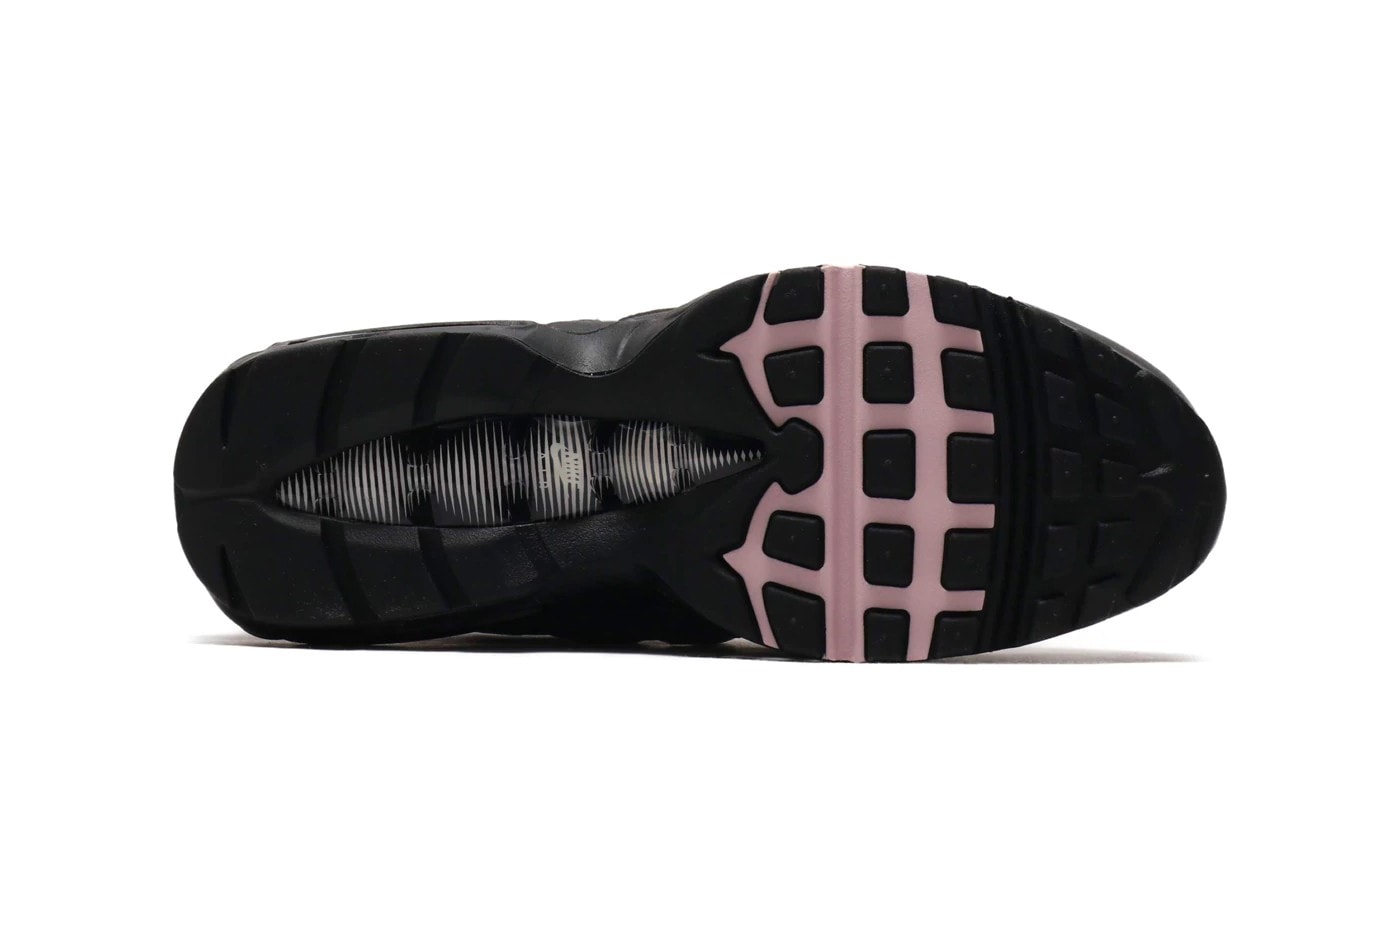 Nike Air Max 95 “Gunsmoke/Pink Foam” Release